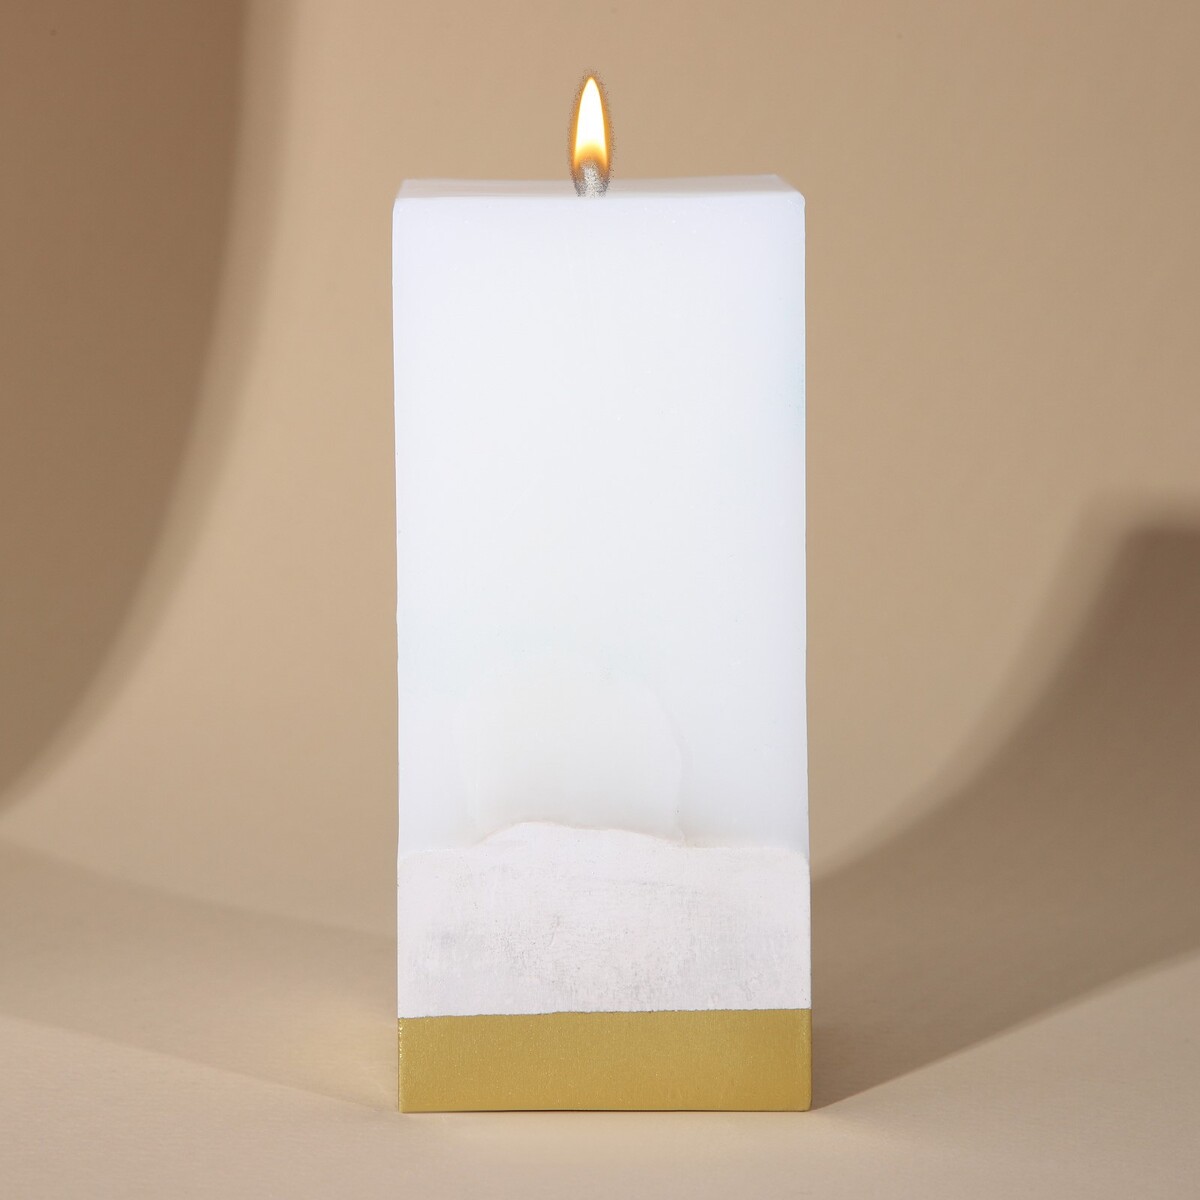 Свеча интерьерная белая с бетоном, низ золото, 6 х 6 х 14 см свеча интерьерная белая с бетоном 14 х 5 см